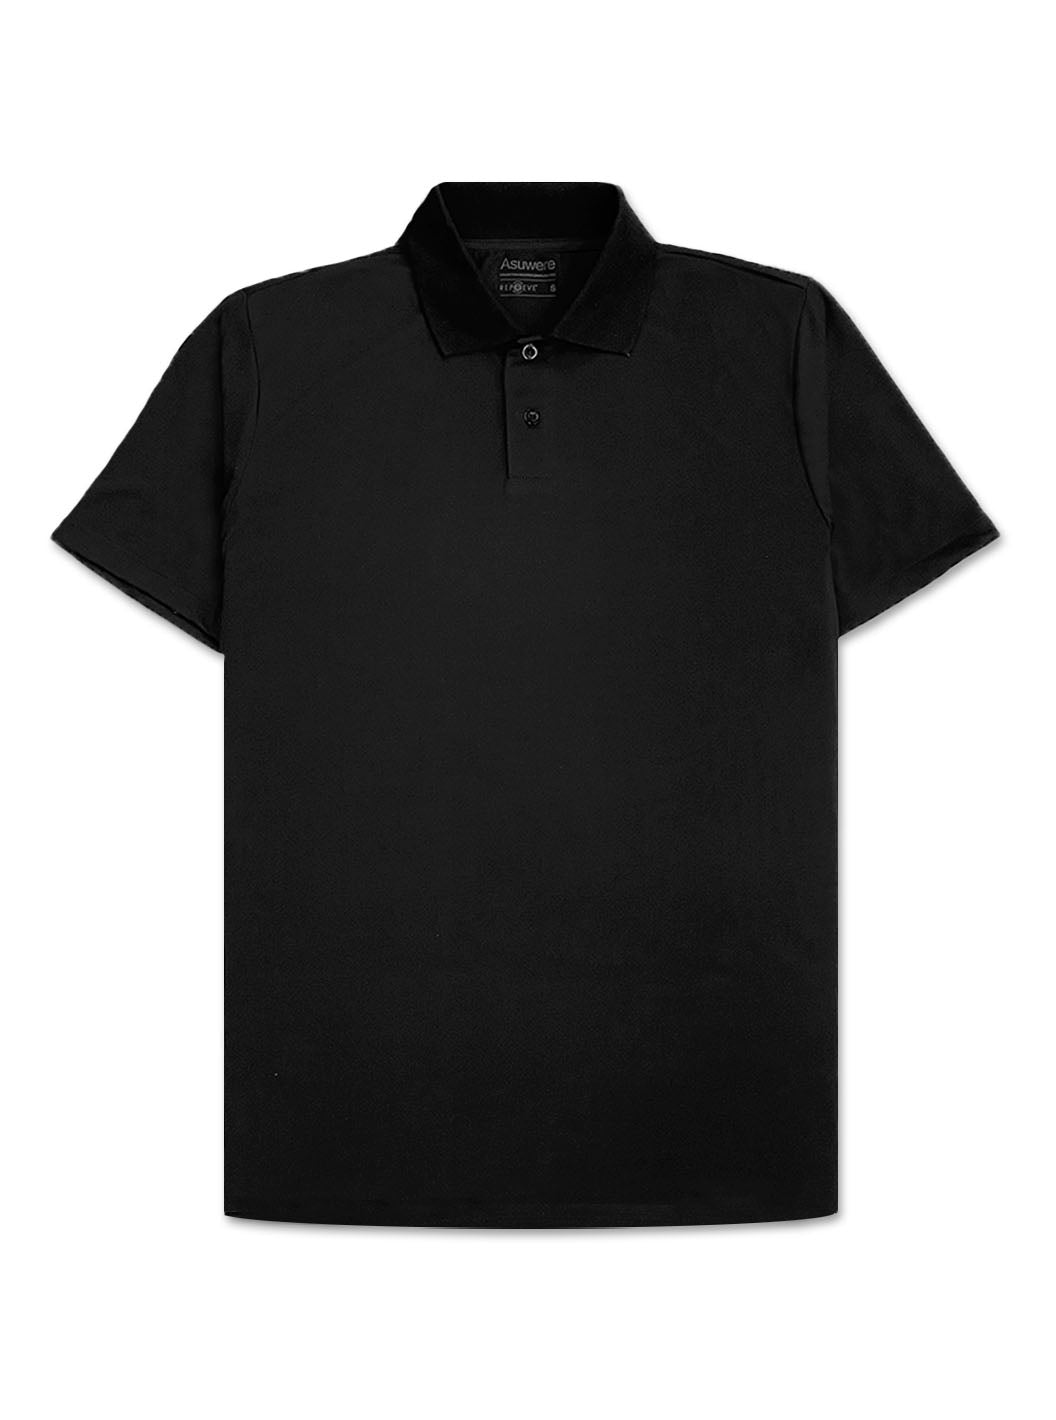 Dry Polo, Black - Polo Shirts NZ | Asuwere